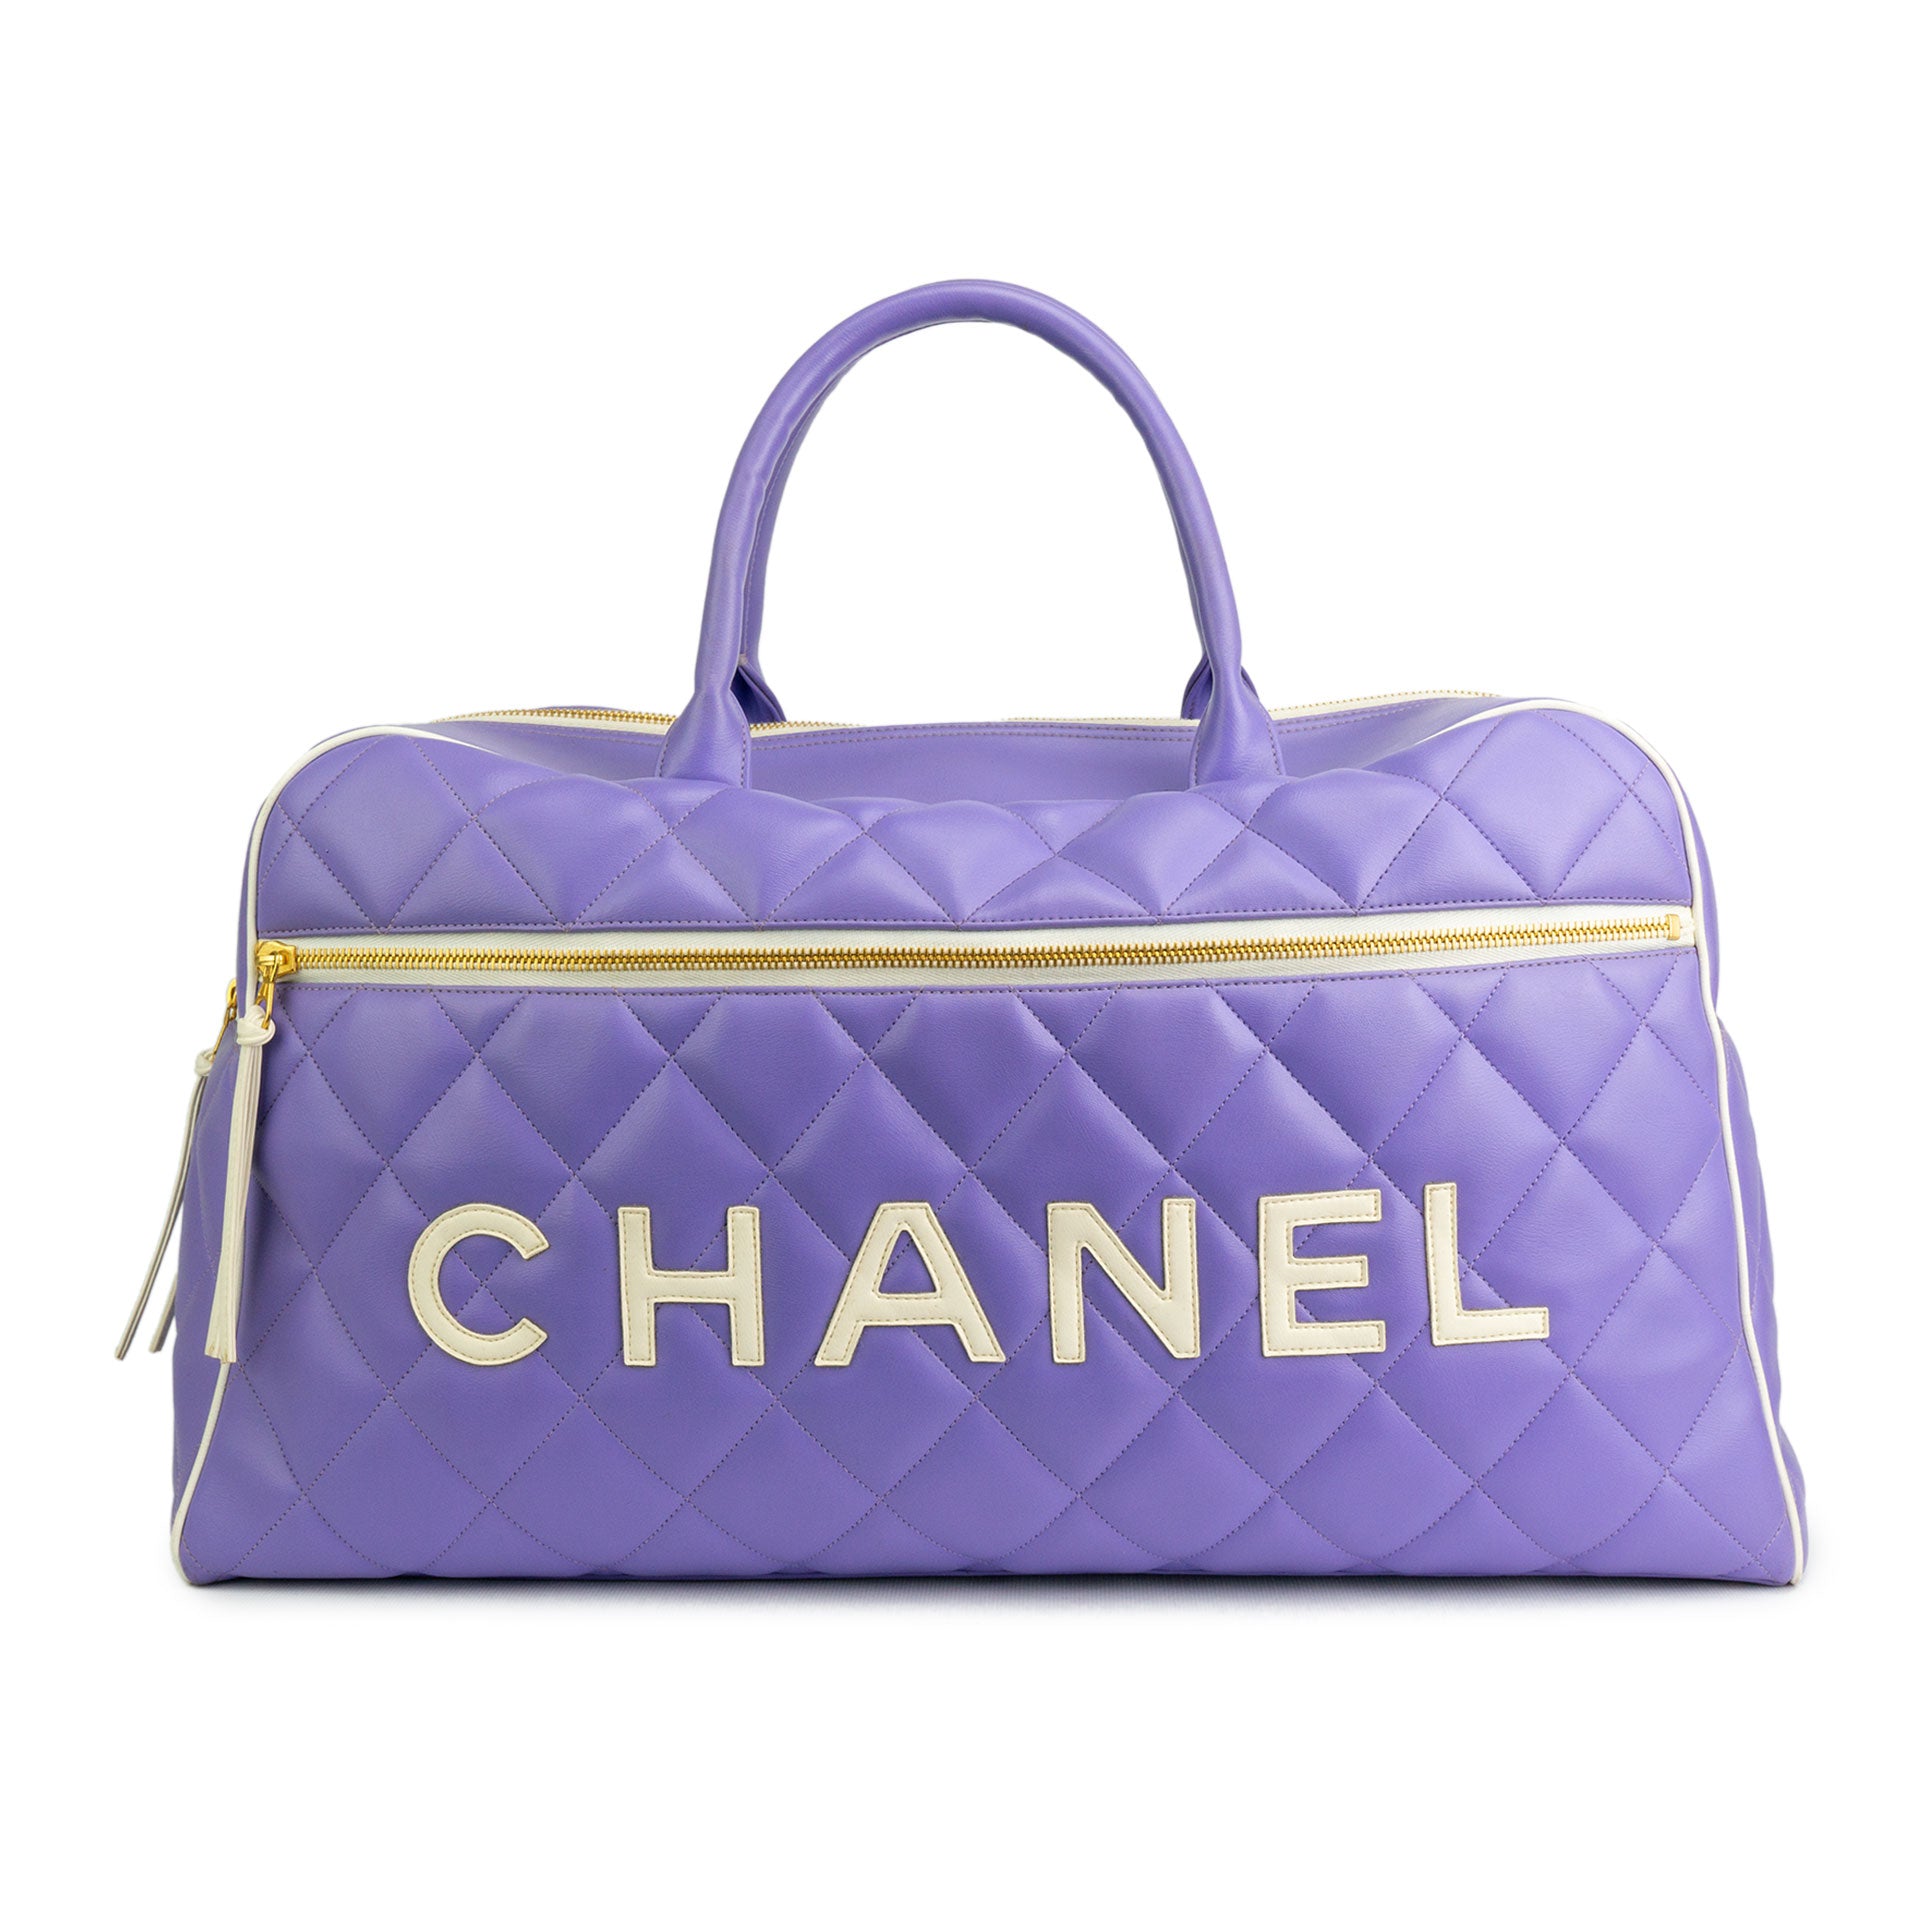 7 Chanel Bags For Travelling  Bragmybag